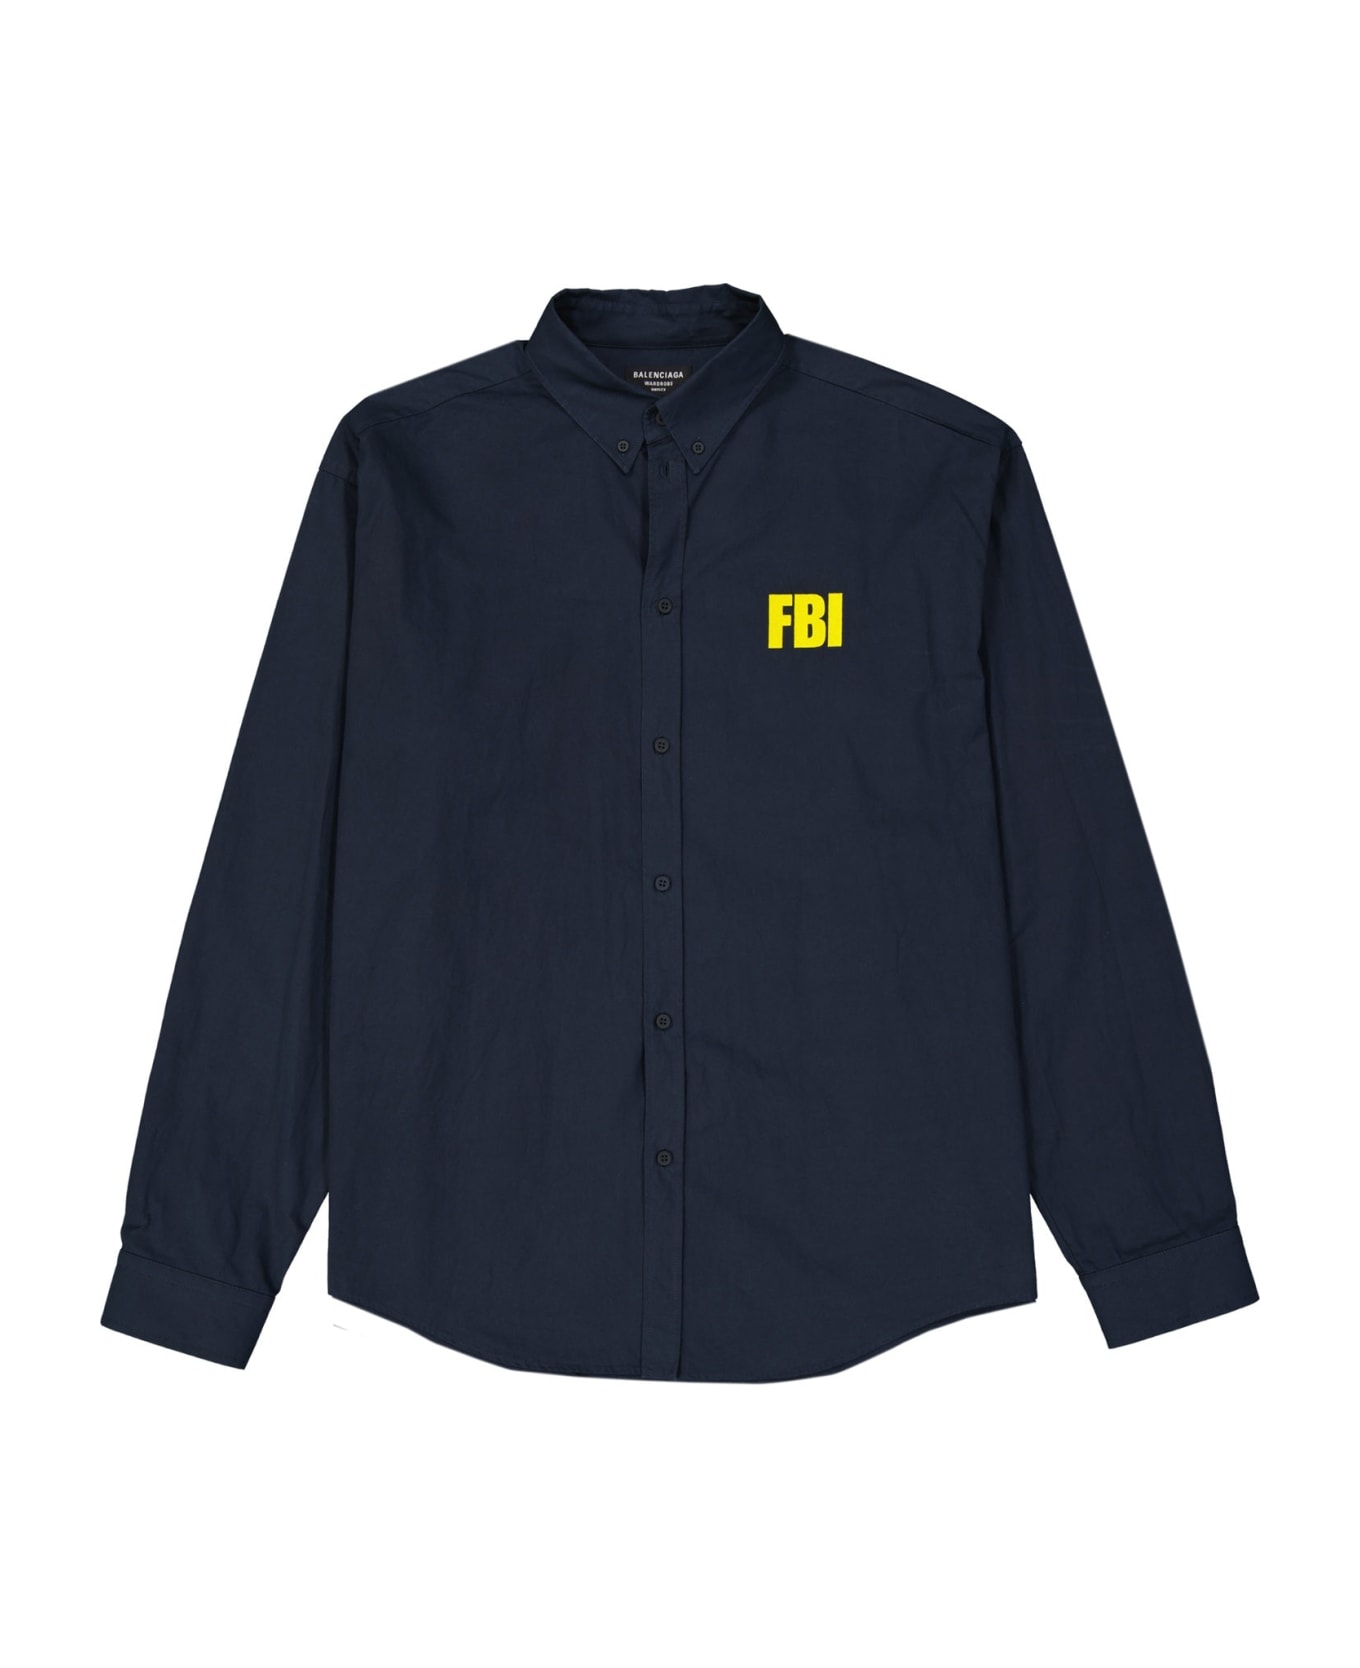 Balenciaga Fbi Cotton Shirt - Blue